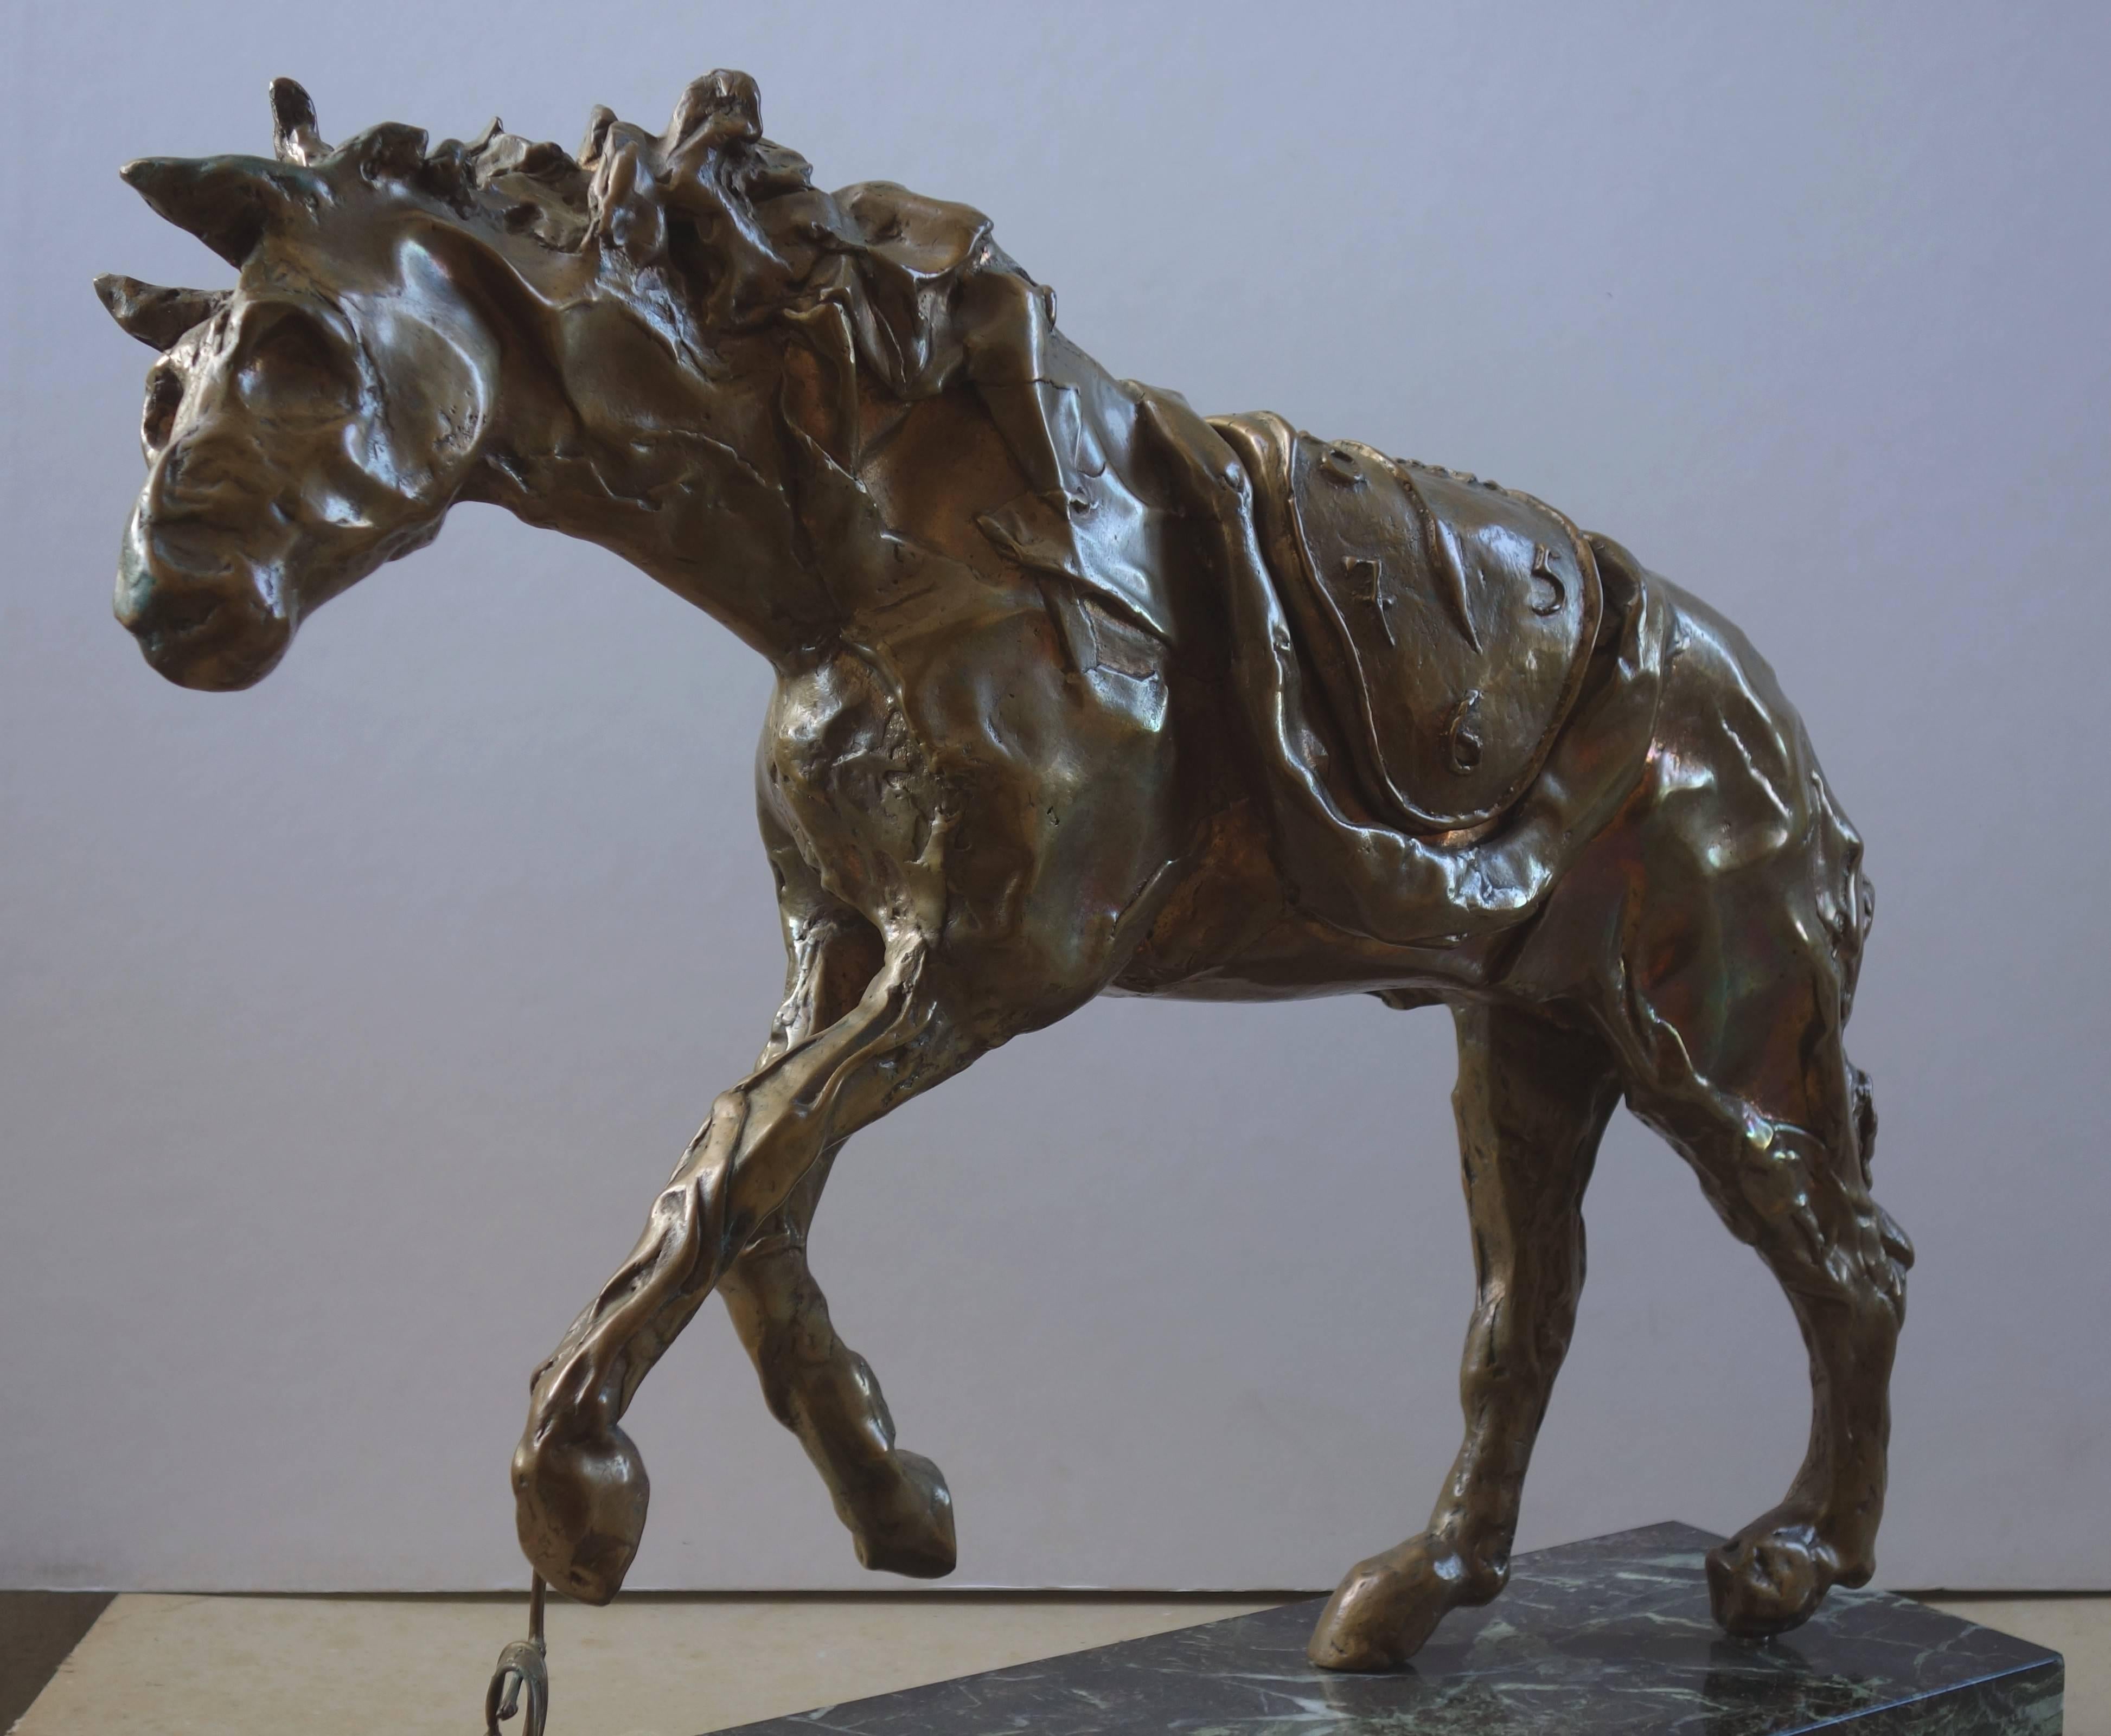 Horse with Molt Clock - Tall bronze sculpture - Signed /350ex - Surrealist Sculpture by Salvador Dalí